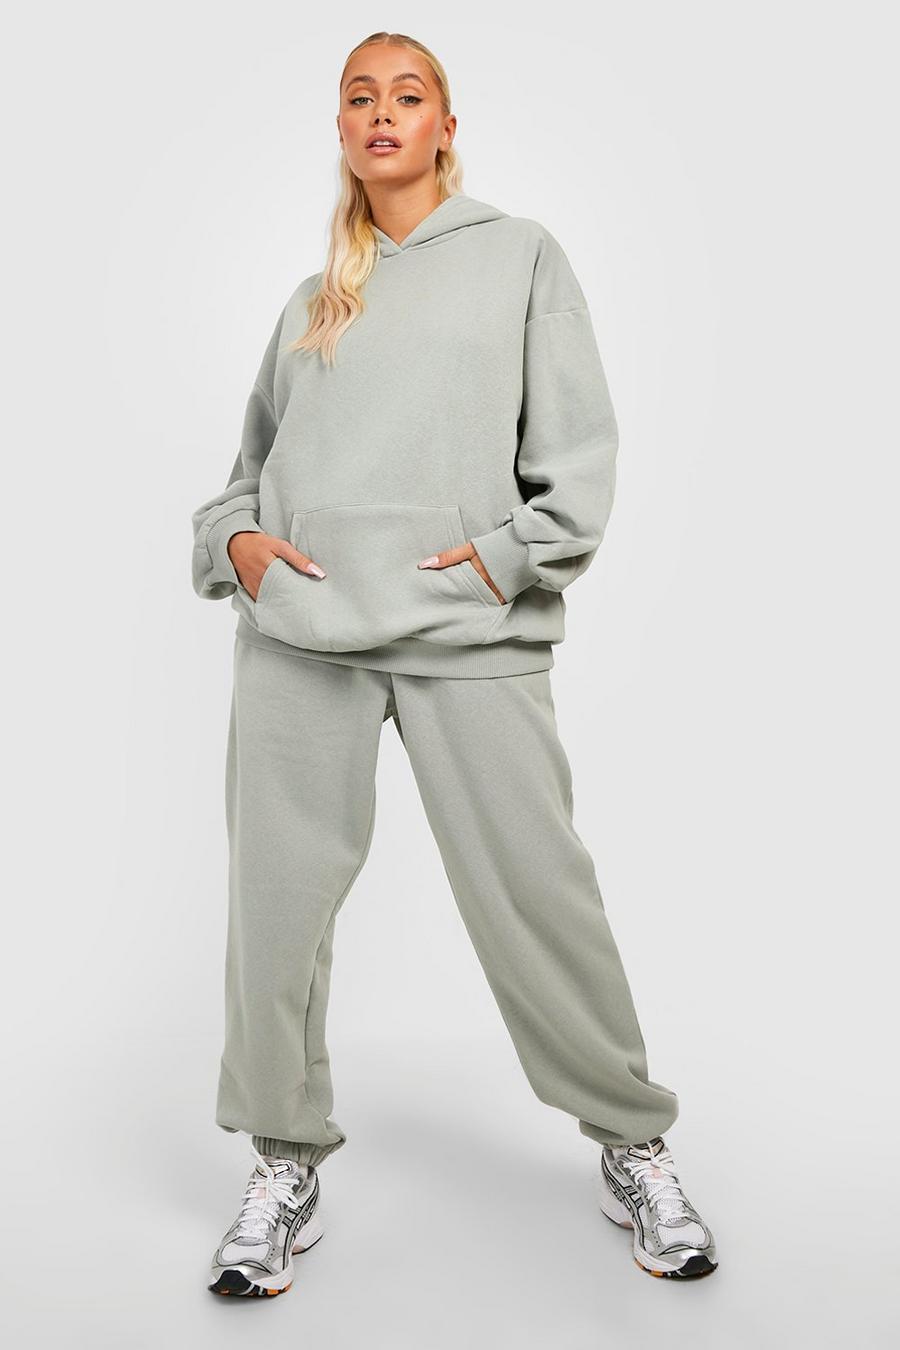 https://media.boohoo.com/i/boohoo/gzz25094_khaki_xl/female-khaki-basic-oversized-jogger/?w=900&qlt=default&fmt.jp2.qlt=70&fmt=auto&sm=fit